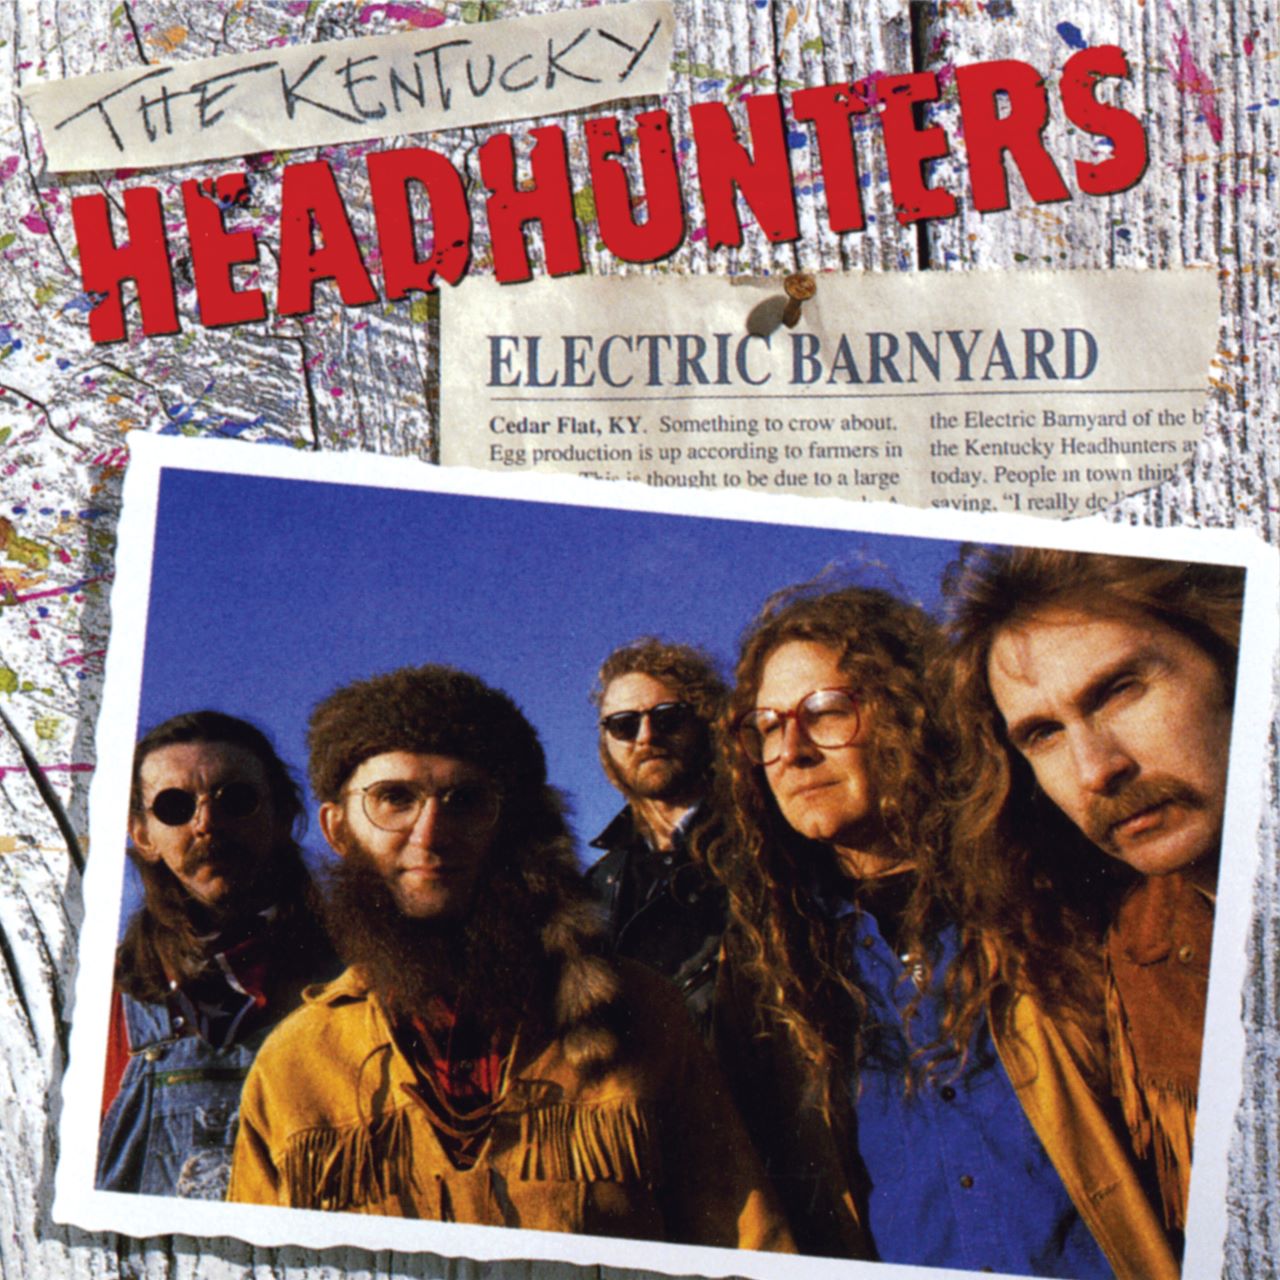 Kentucky Headhunters - Electric Barnyard cover album